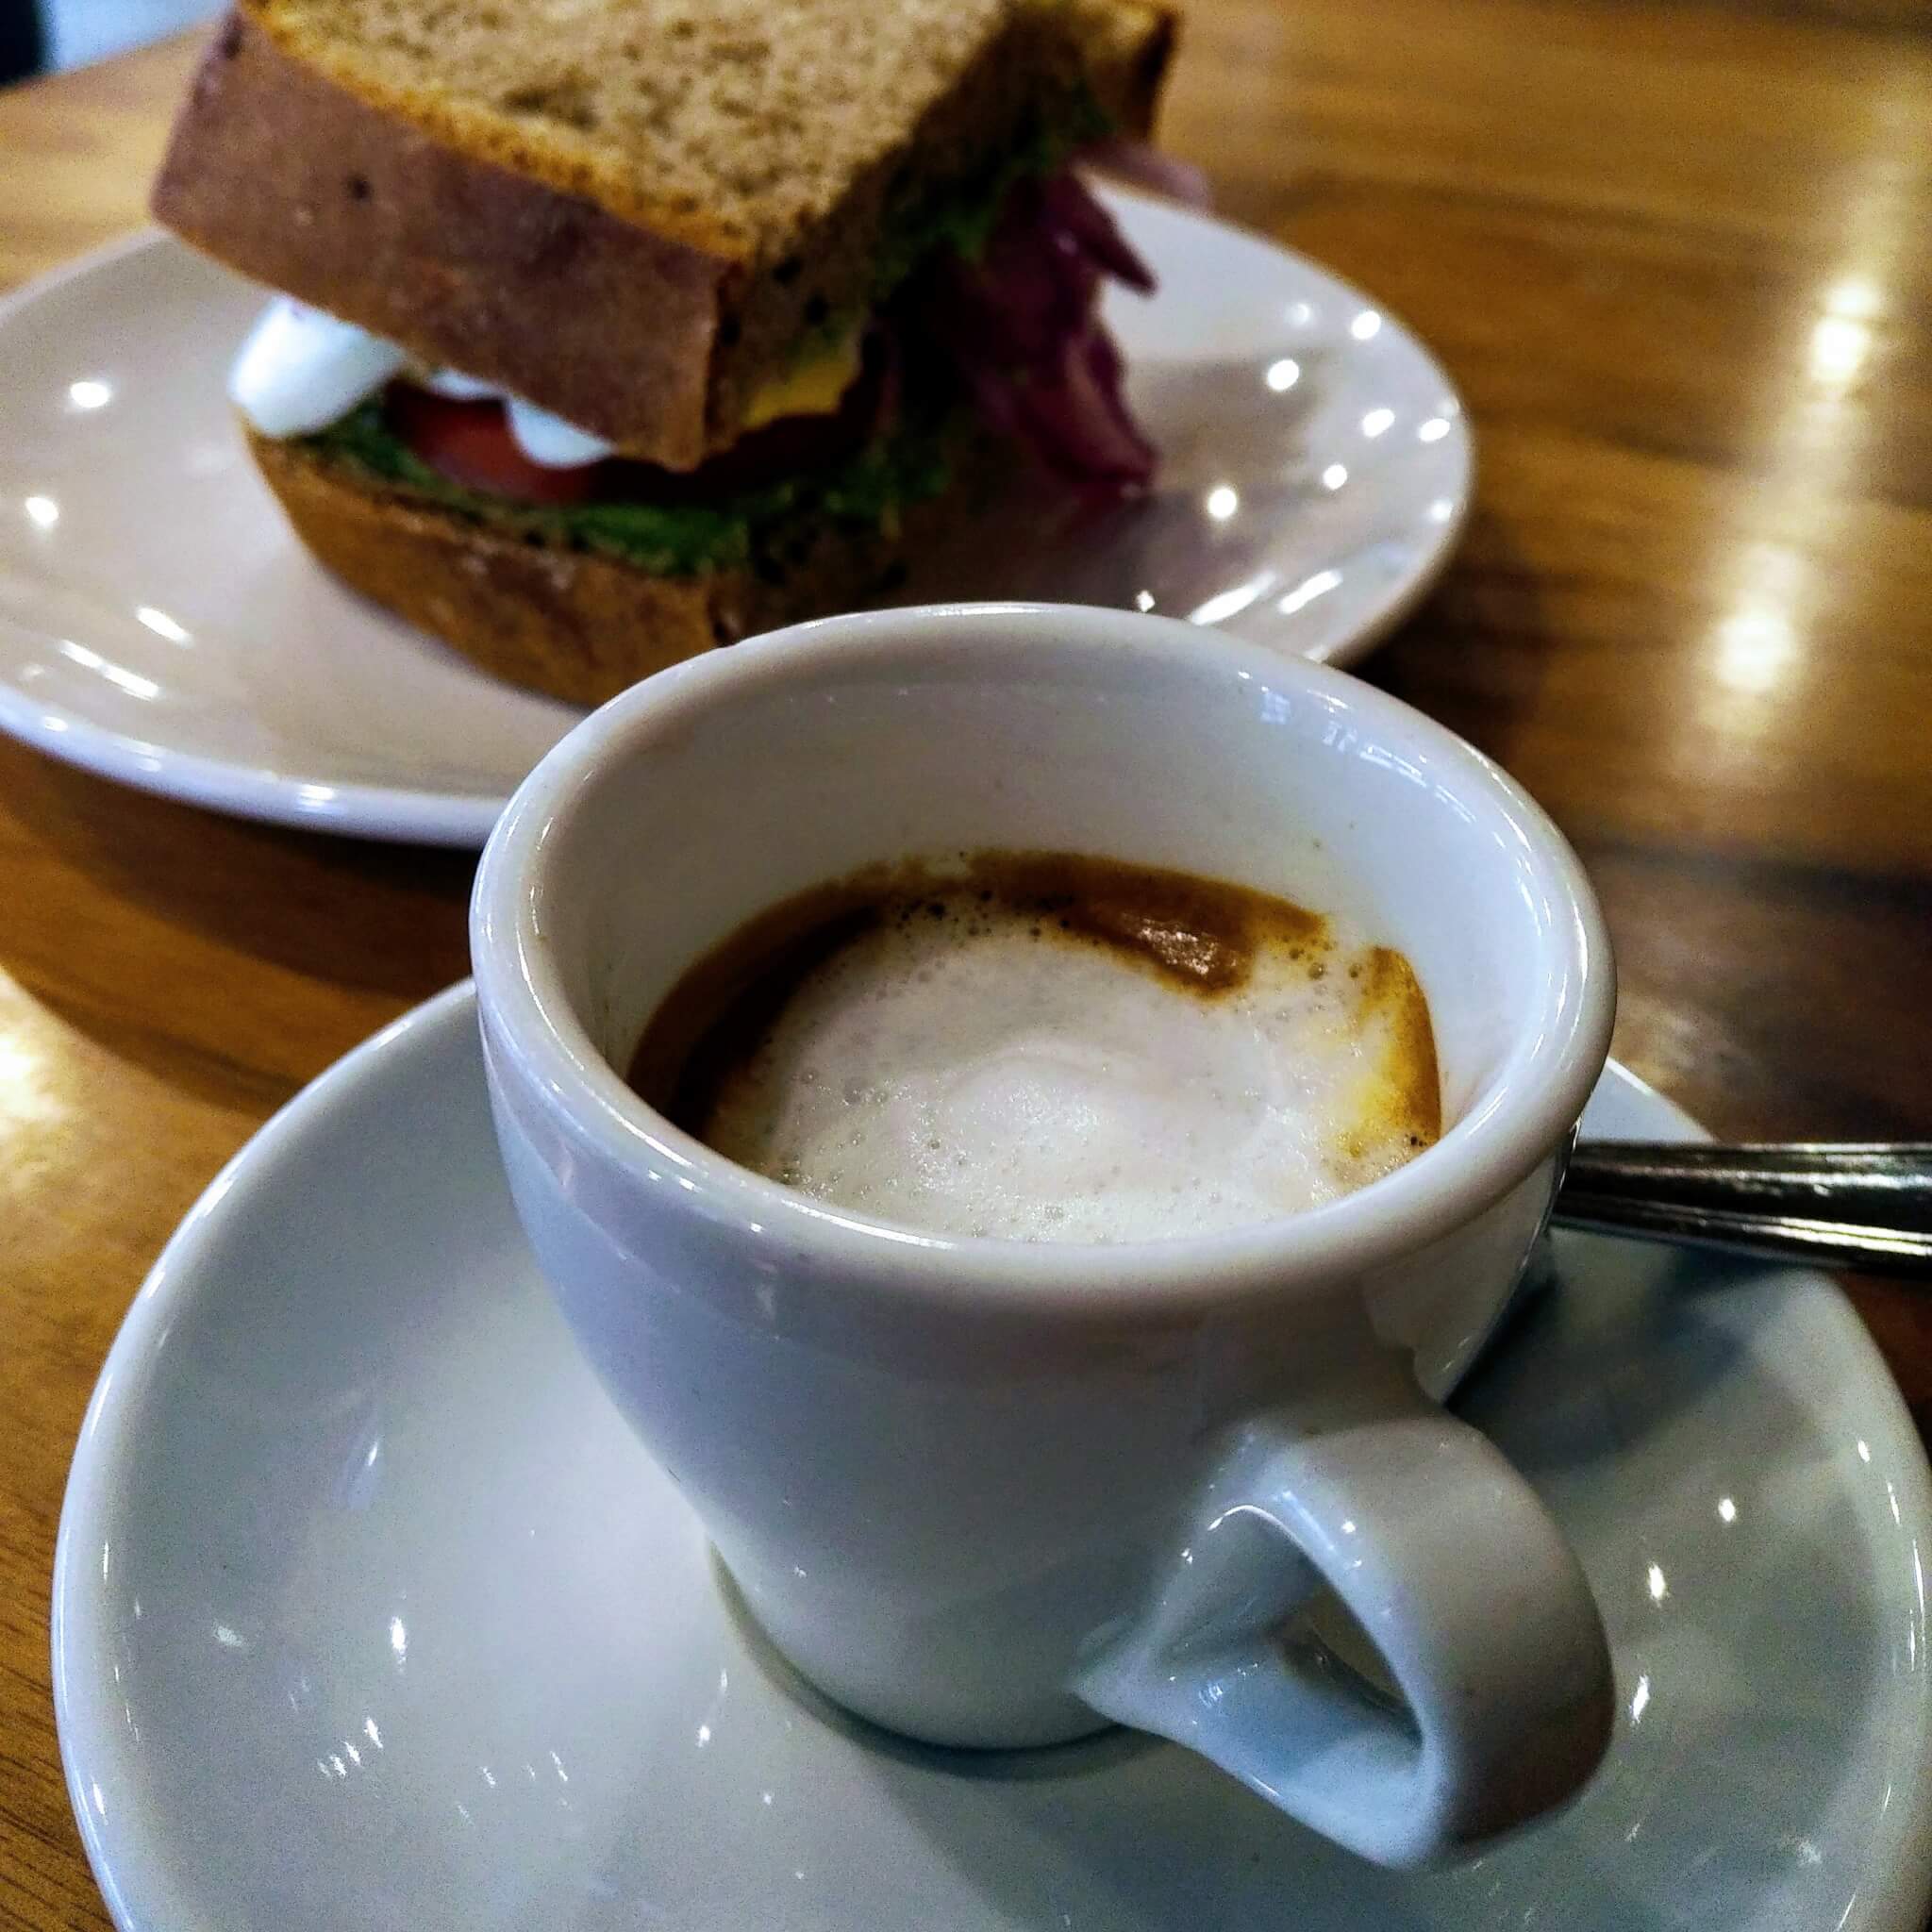 Macchiato with a sandwich sitting on a plate beside it